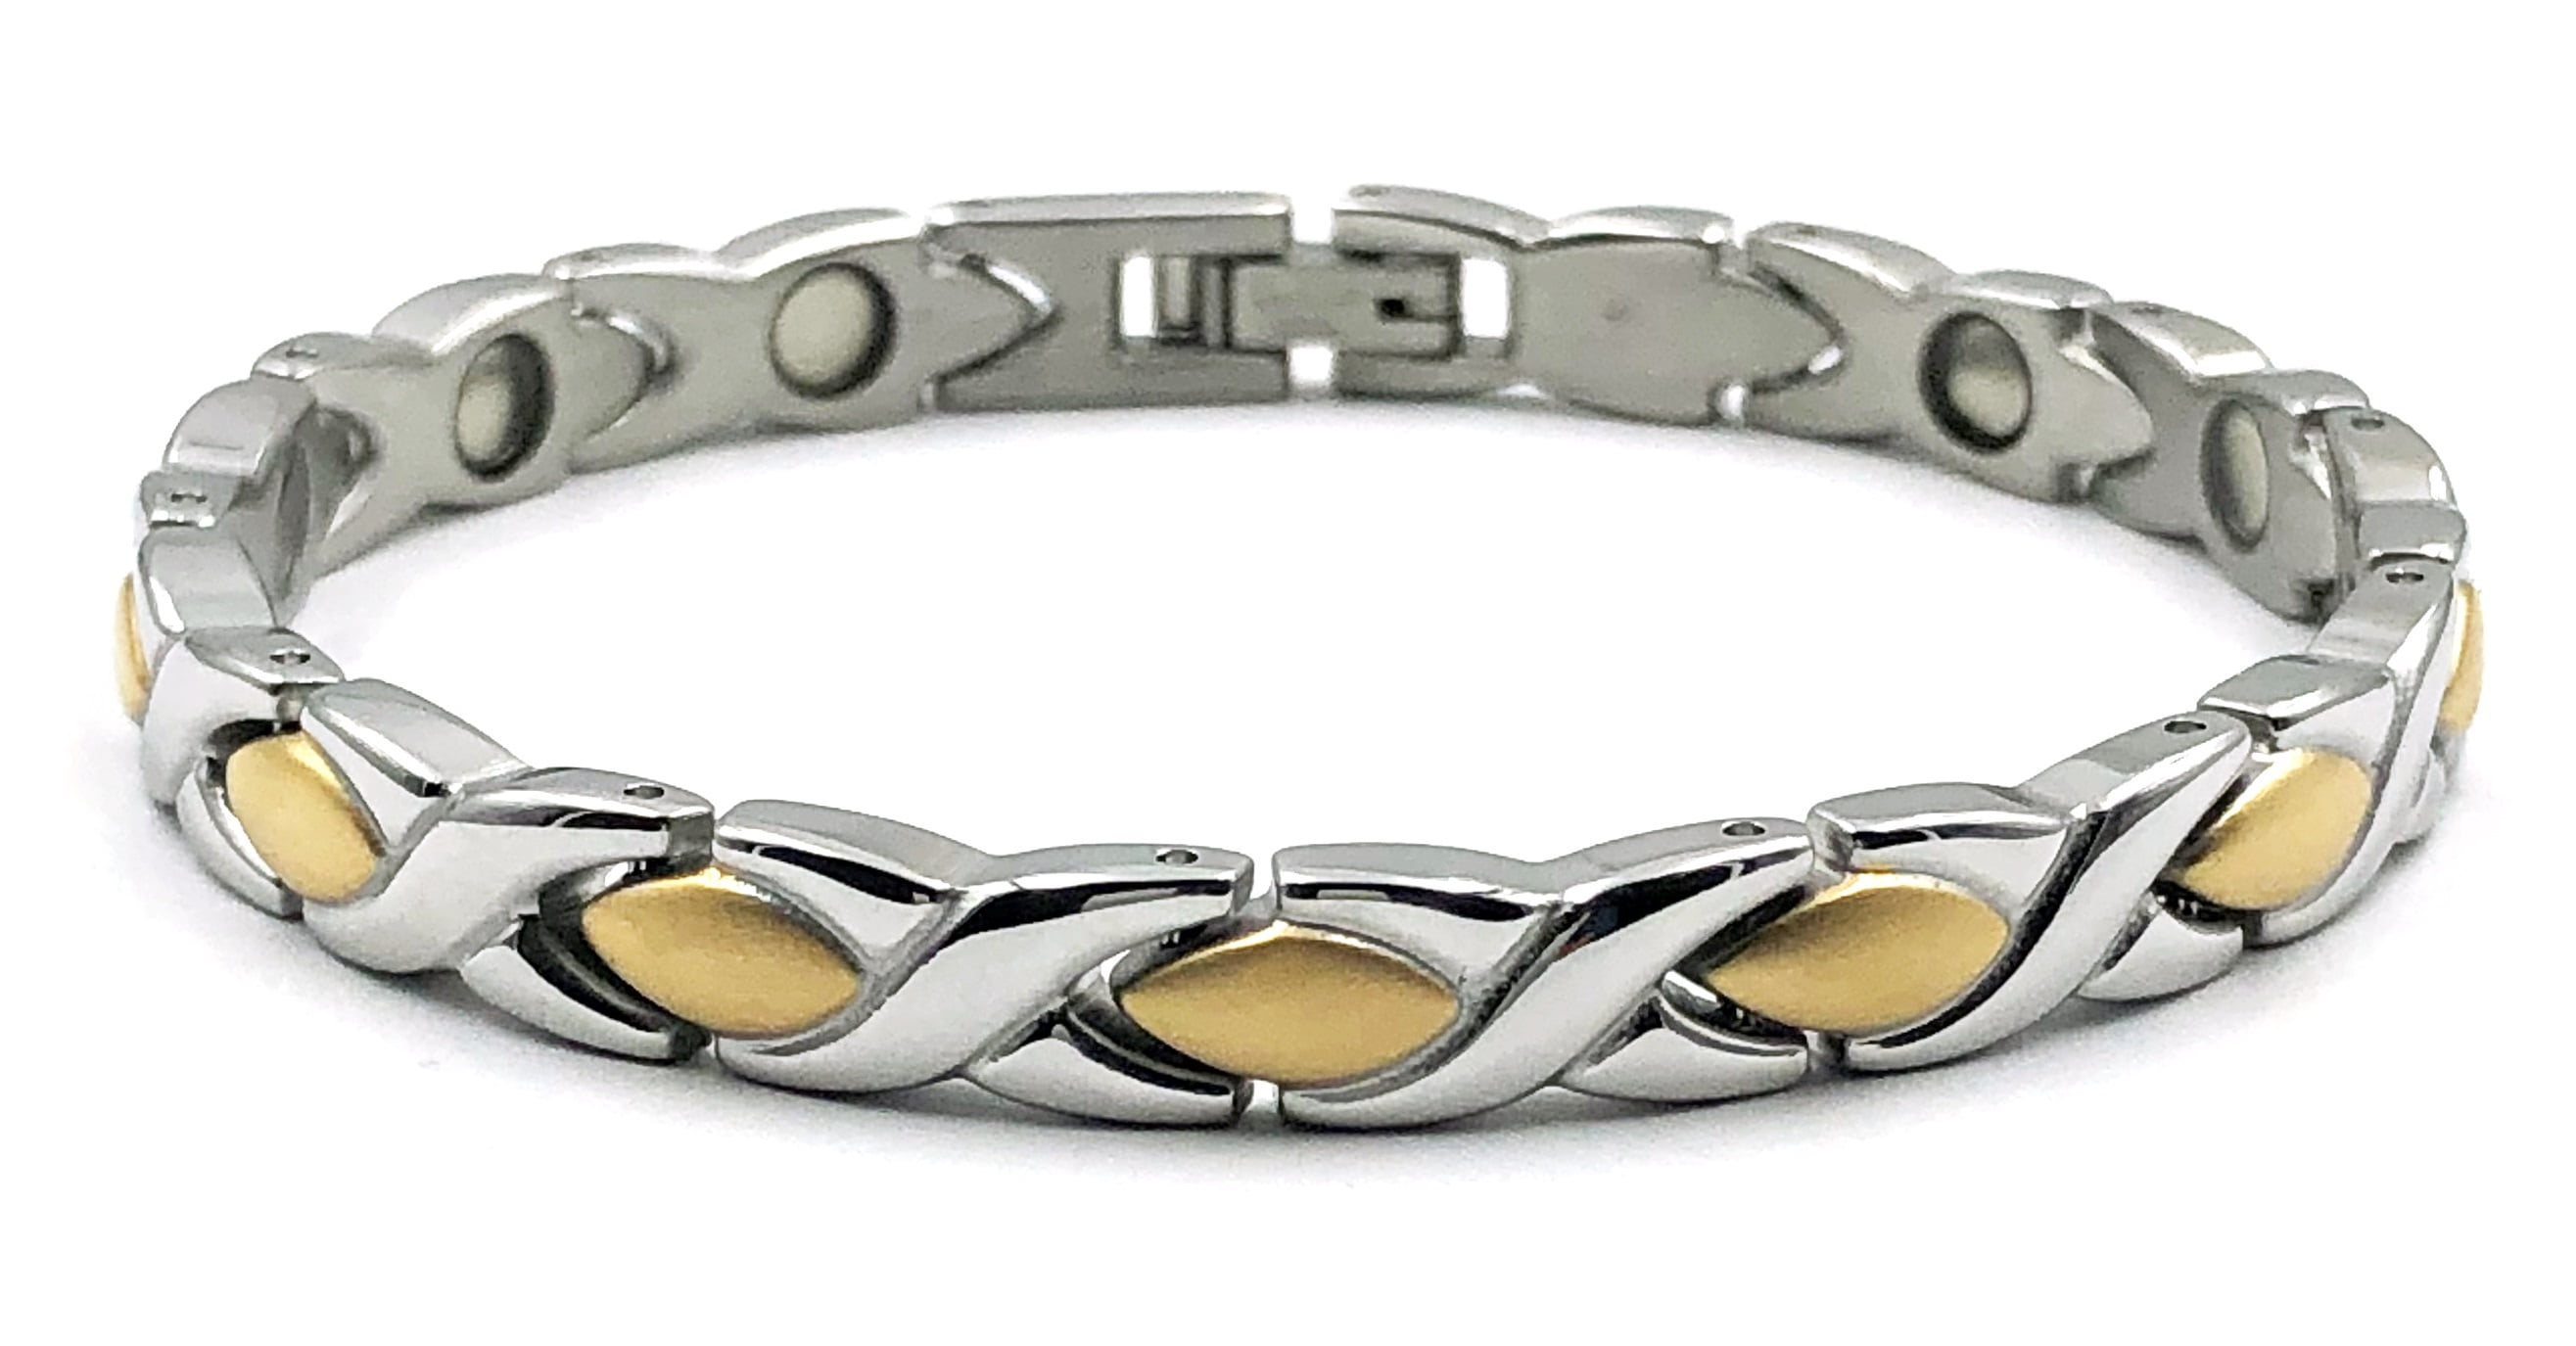 1 4 XOX Women Magnetic Bracelet Stainless Steel Bracelet Magnetic Bracelets for Women Size 7 2 in cba3ad39 532f 4411 9cb5 283cf462969b.1f8efc033f5f3d28174f5a8598acedc4